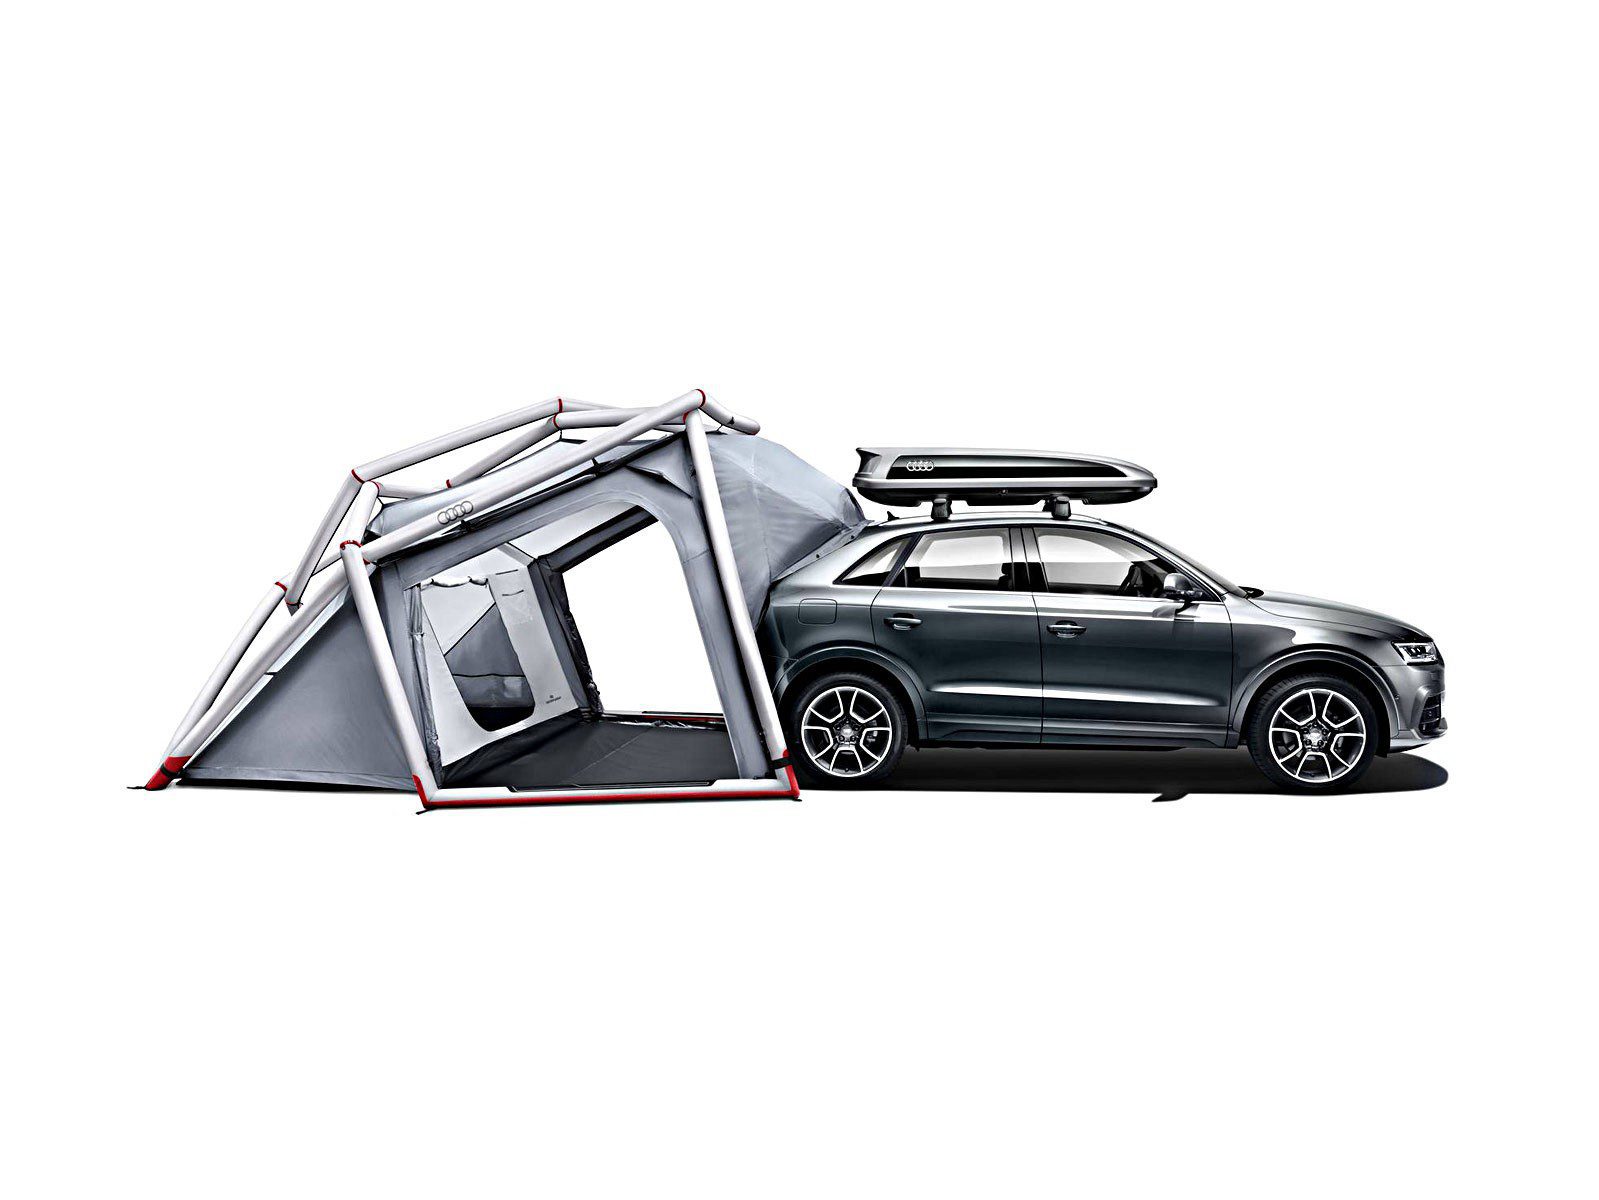 Audi opblaasbare tent